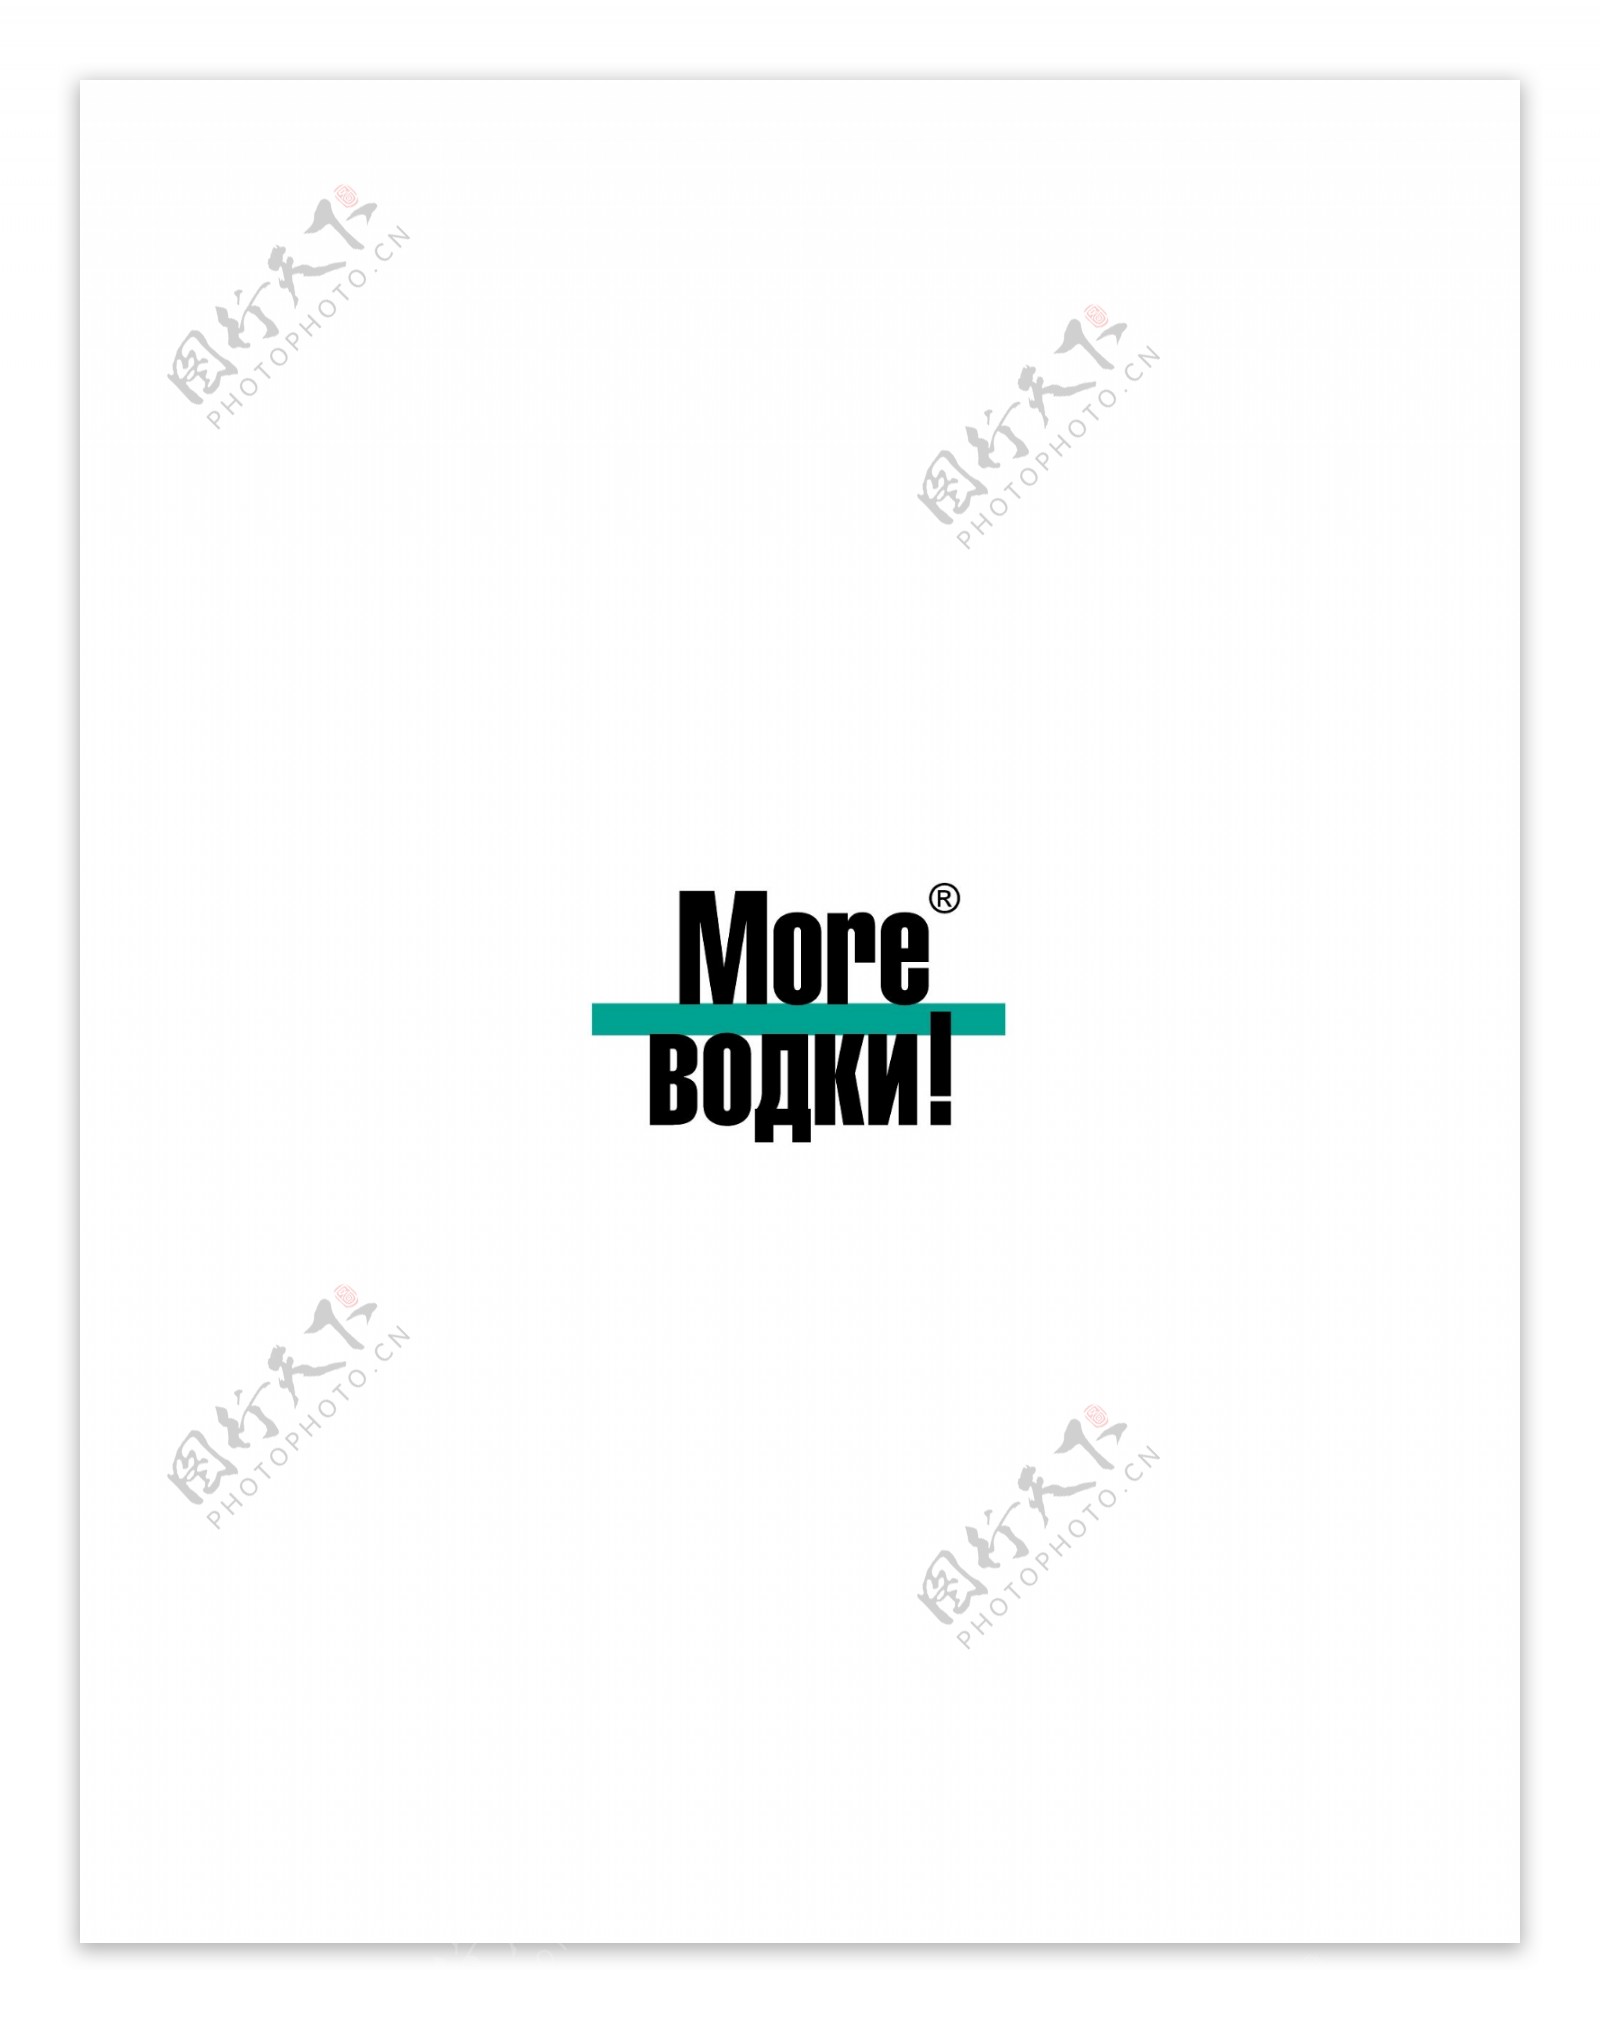 Morevodkilogo设计欣赏Morevodki广告标志下载标志设计欣赏